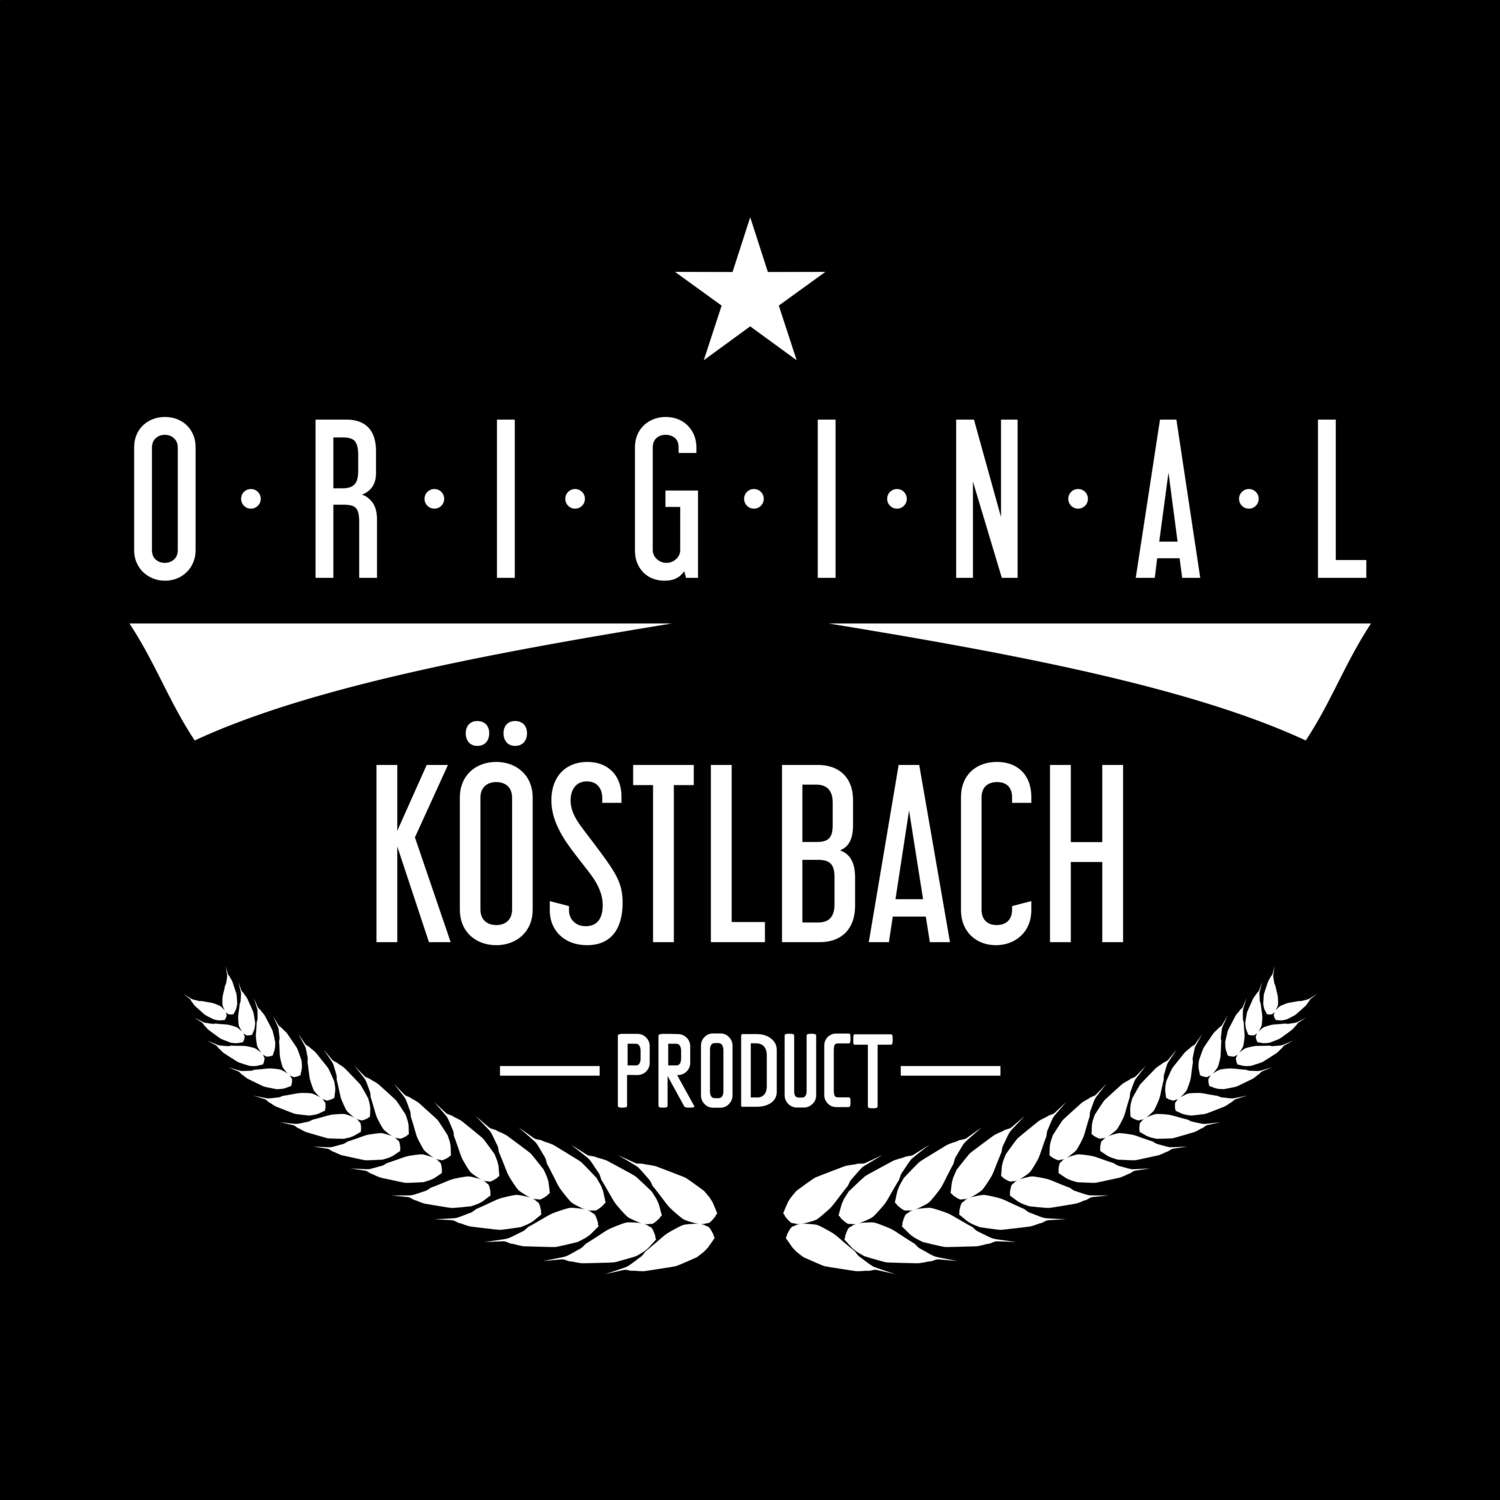 Köstlbach T-Shirt »Original Product«